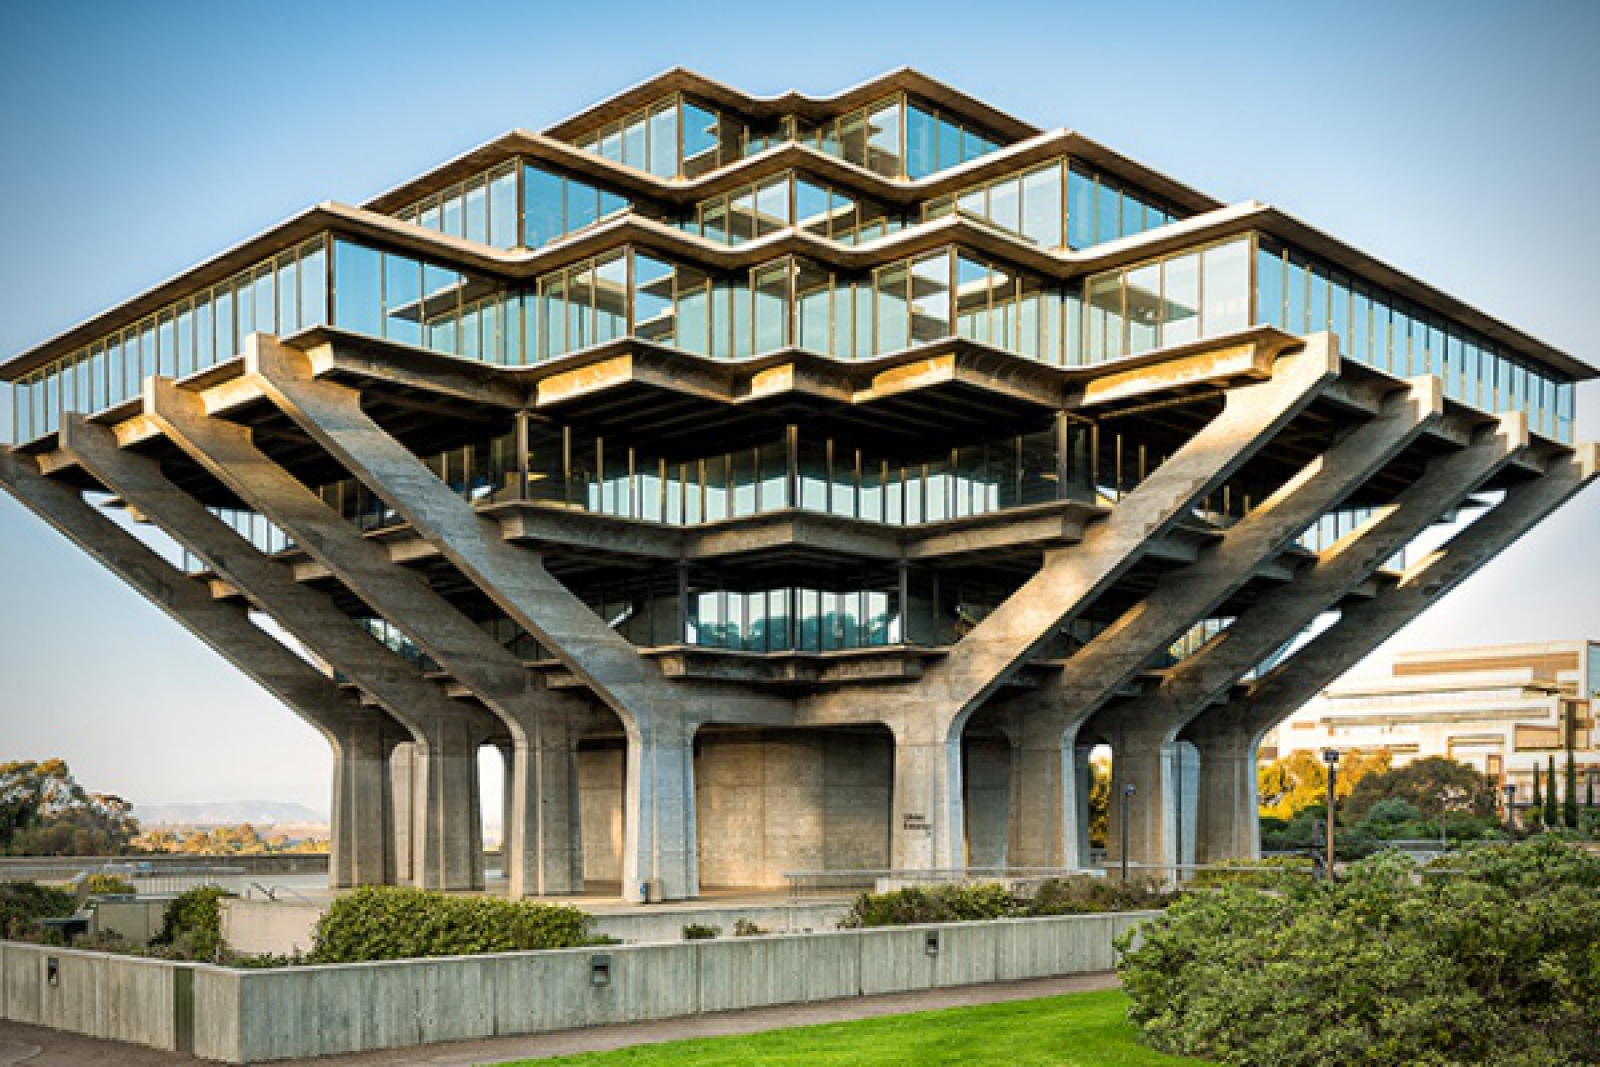 Us architecture. Библиотека Гейзеля в Сан-Диего. Библиотека Гейзеля в Сан-Диего Архитектор. Библиотека Гейзеля в Сан-Диего (1970).. Библиотека Гейзеля в Сан-Диего план.